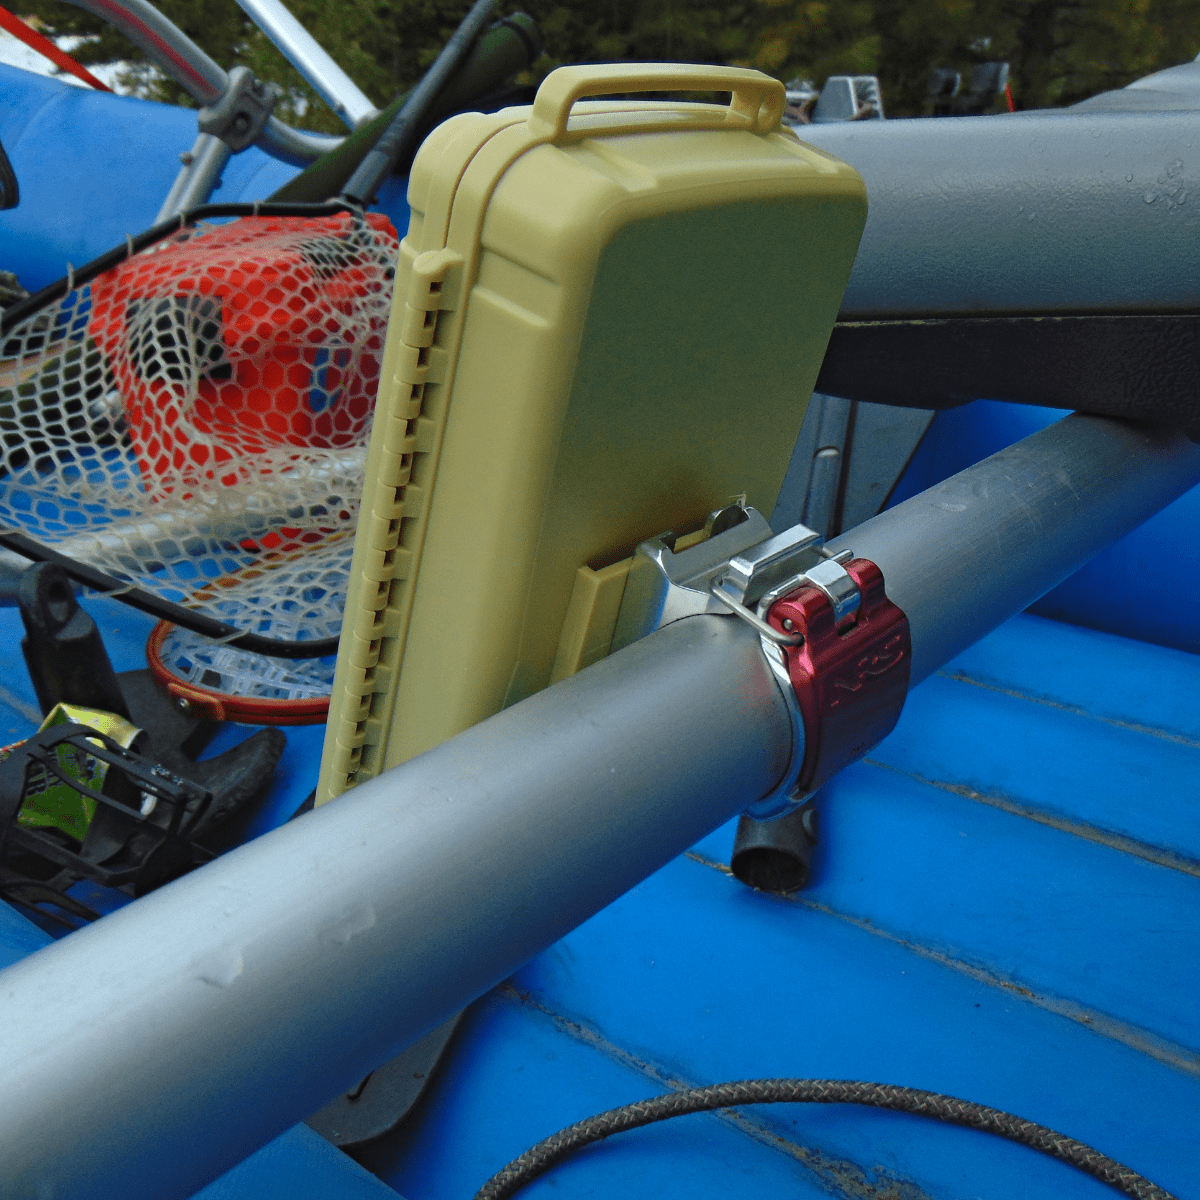 High quality PVC Insert Protectors for Fishing Rod Holders racks